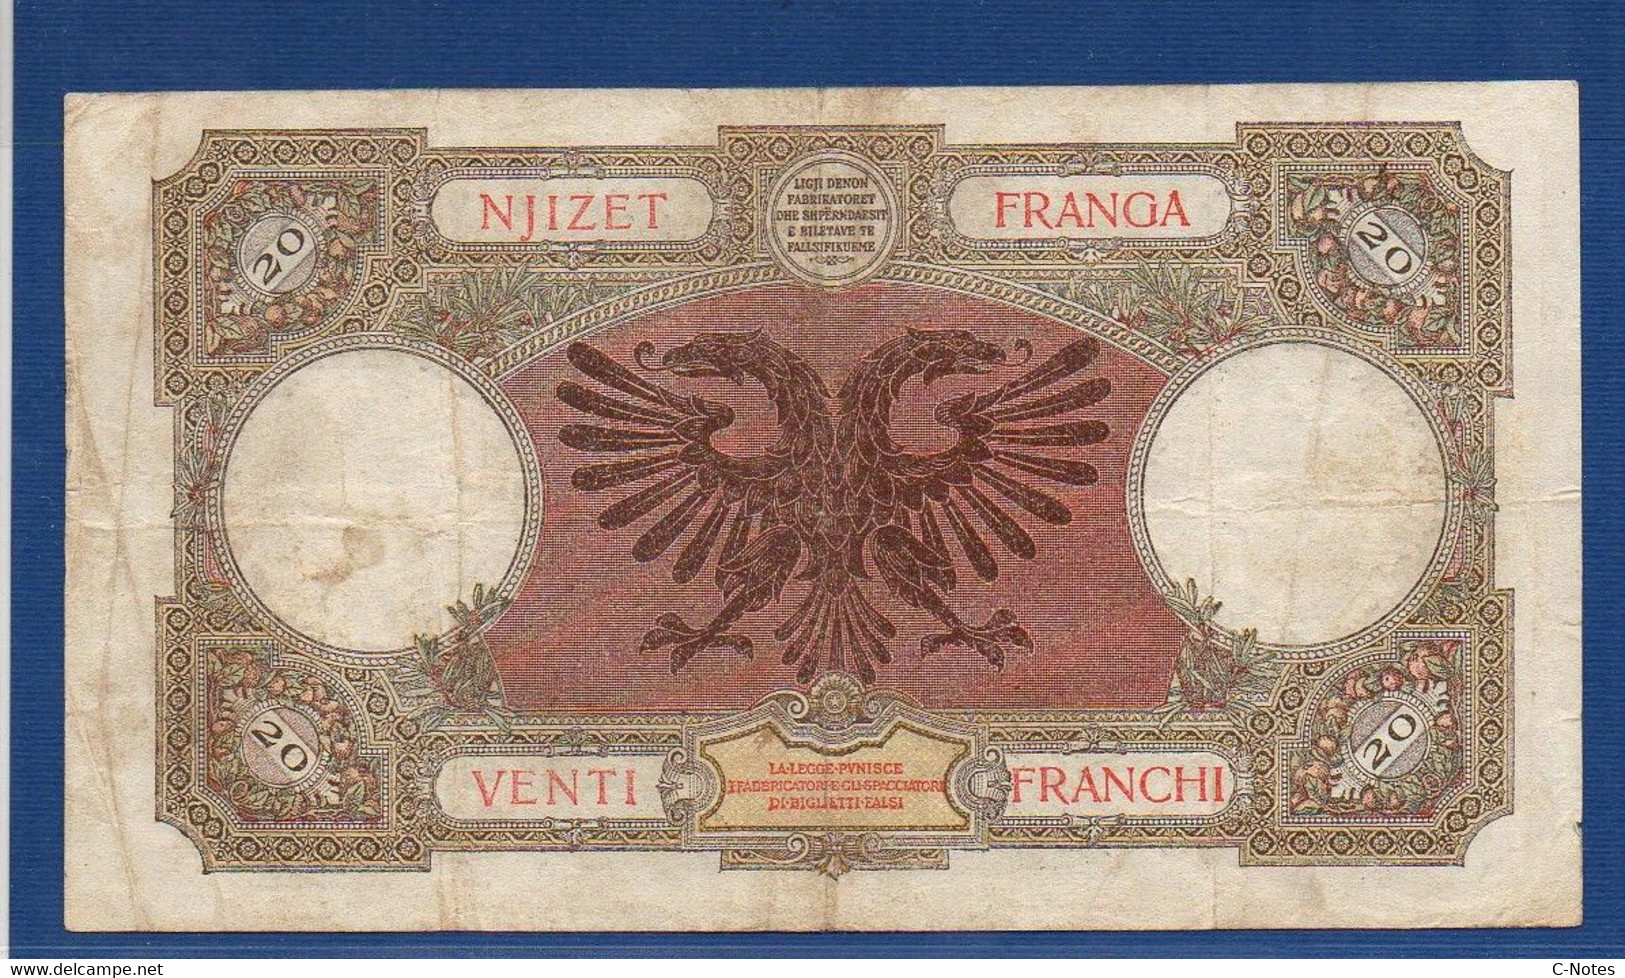 ALBANIA - Banca Nazionale D'Albania - P.7 – 20 Franga 1939 -  F+, Serie L20 5260 - Albanie